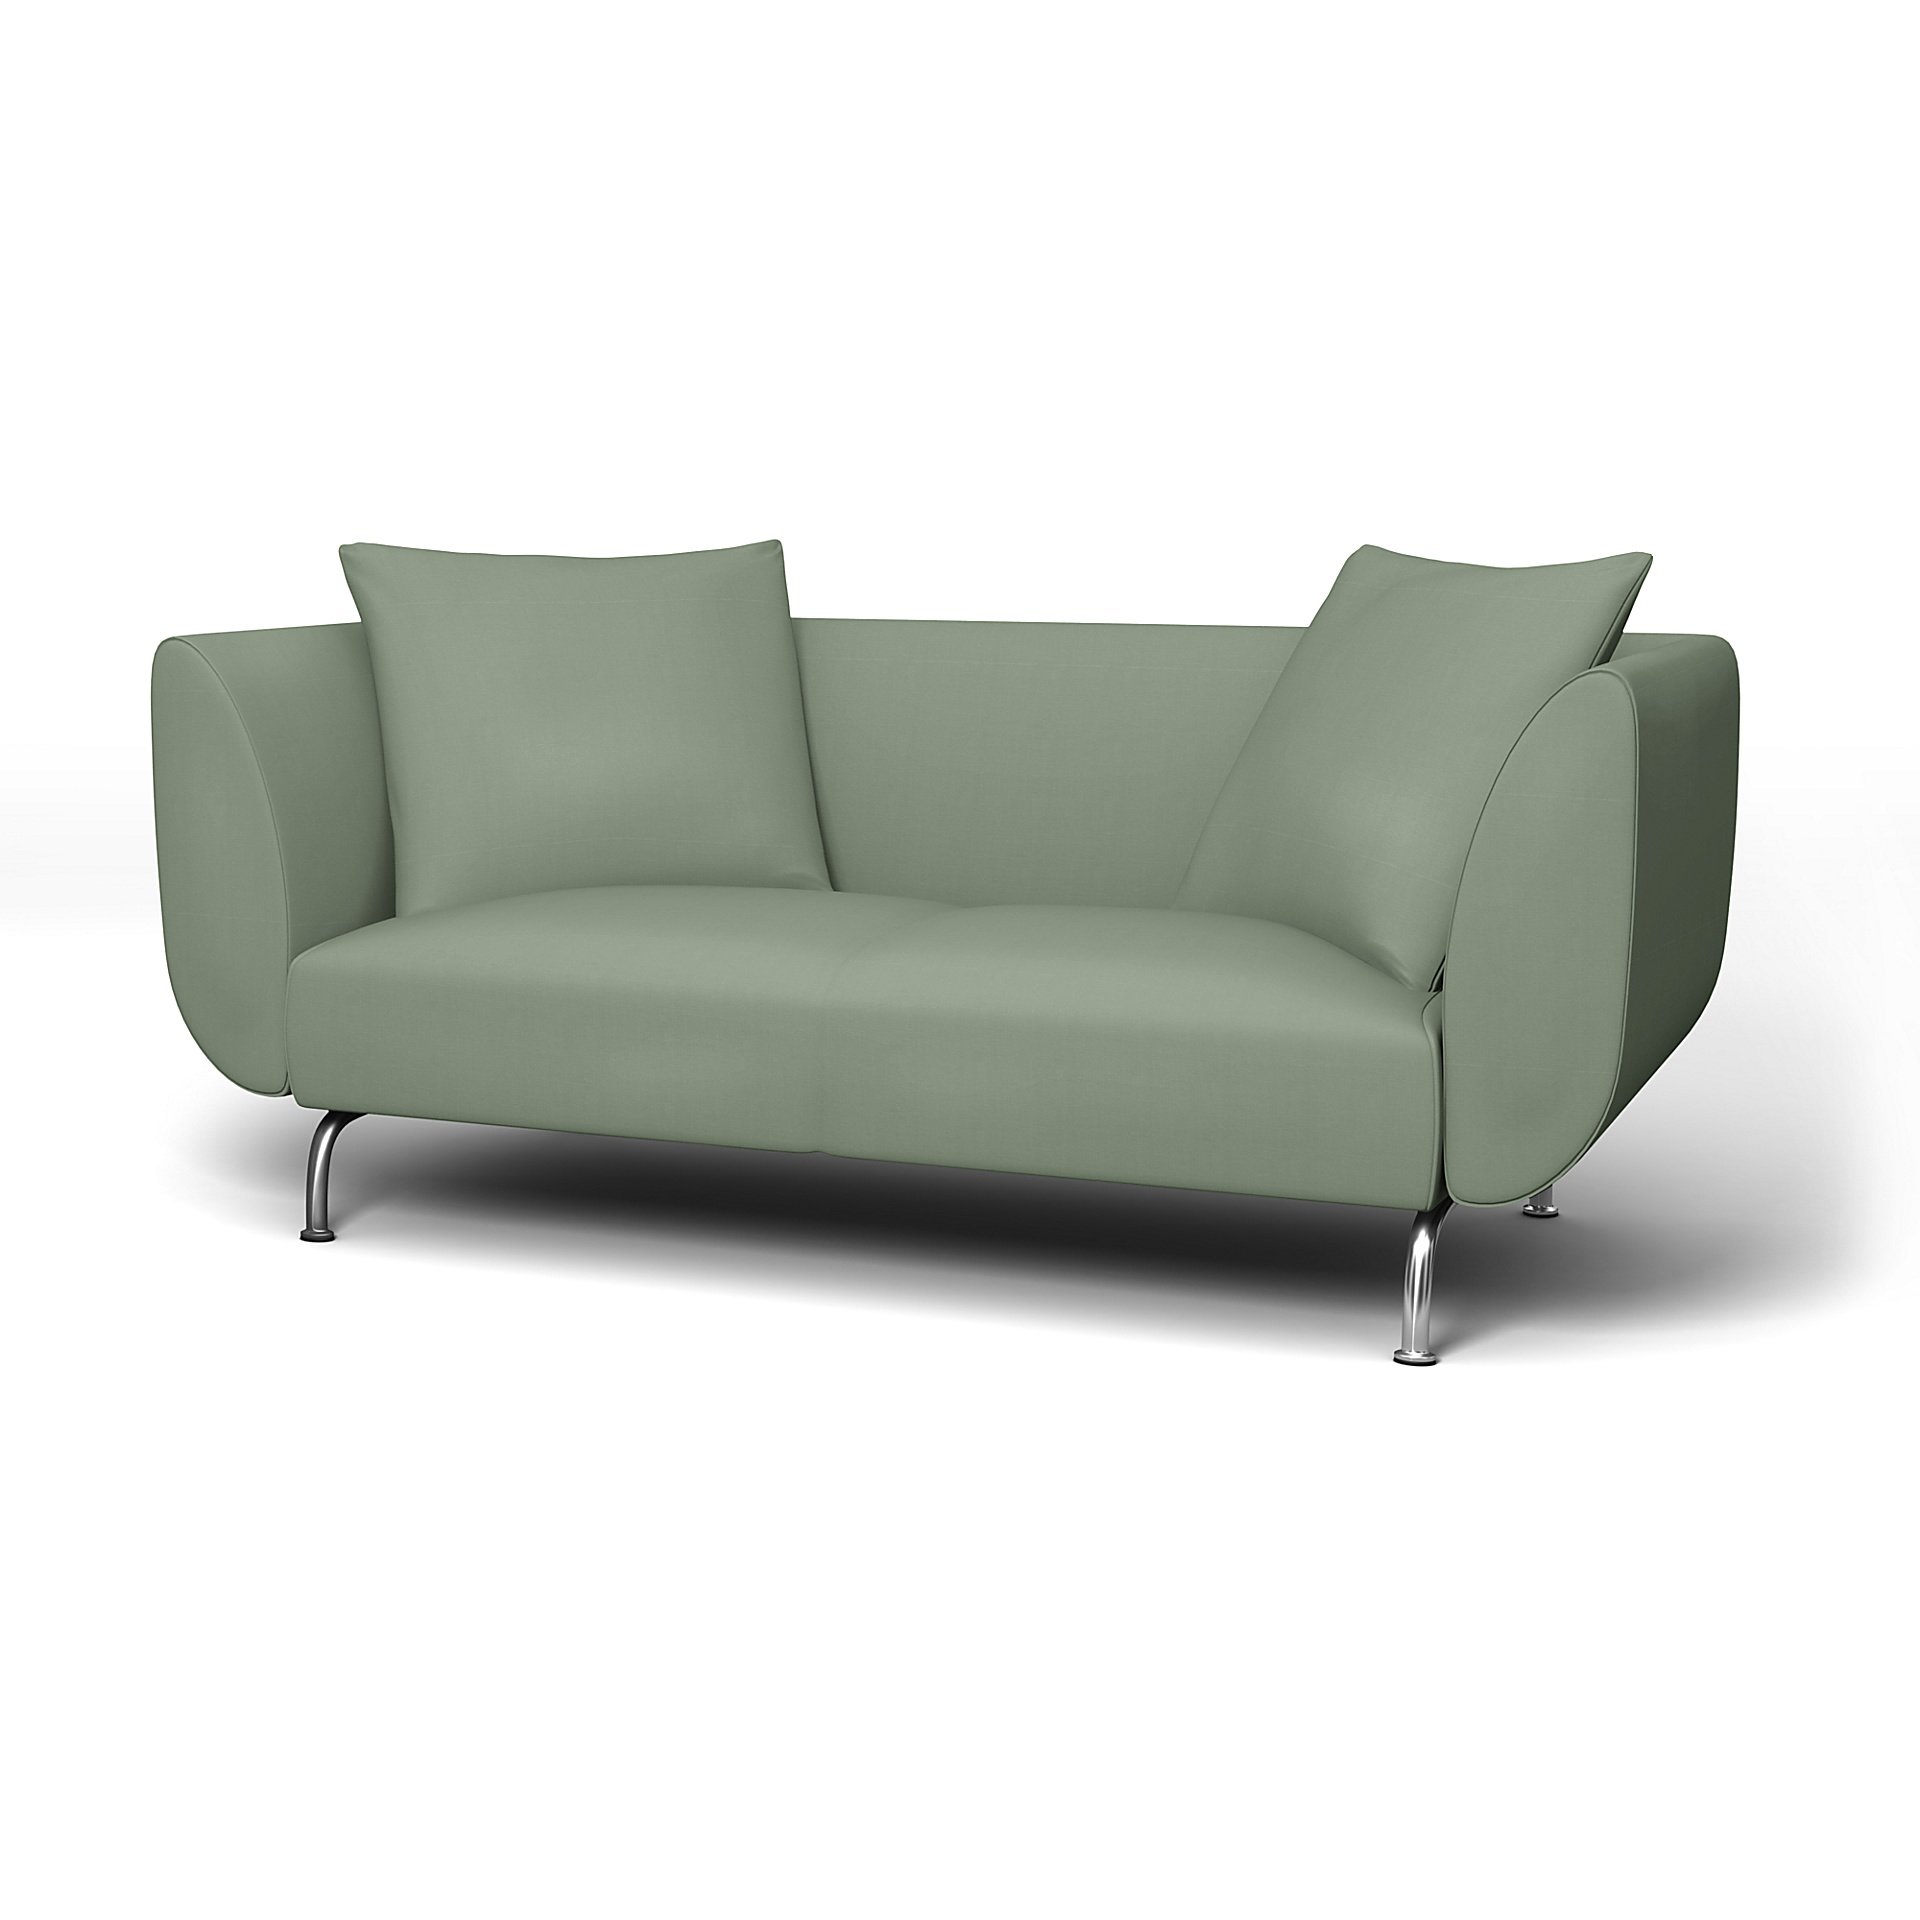 IKEA - Stromstad 2 Seater Sofa Cover, Seagrass, Cotton - Bemz